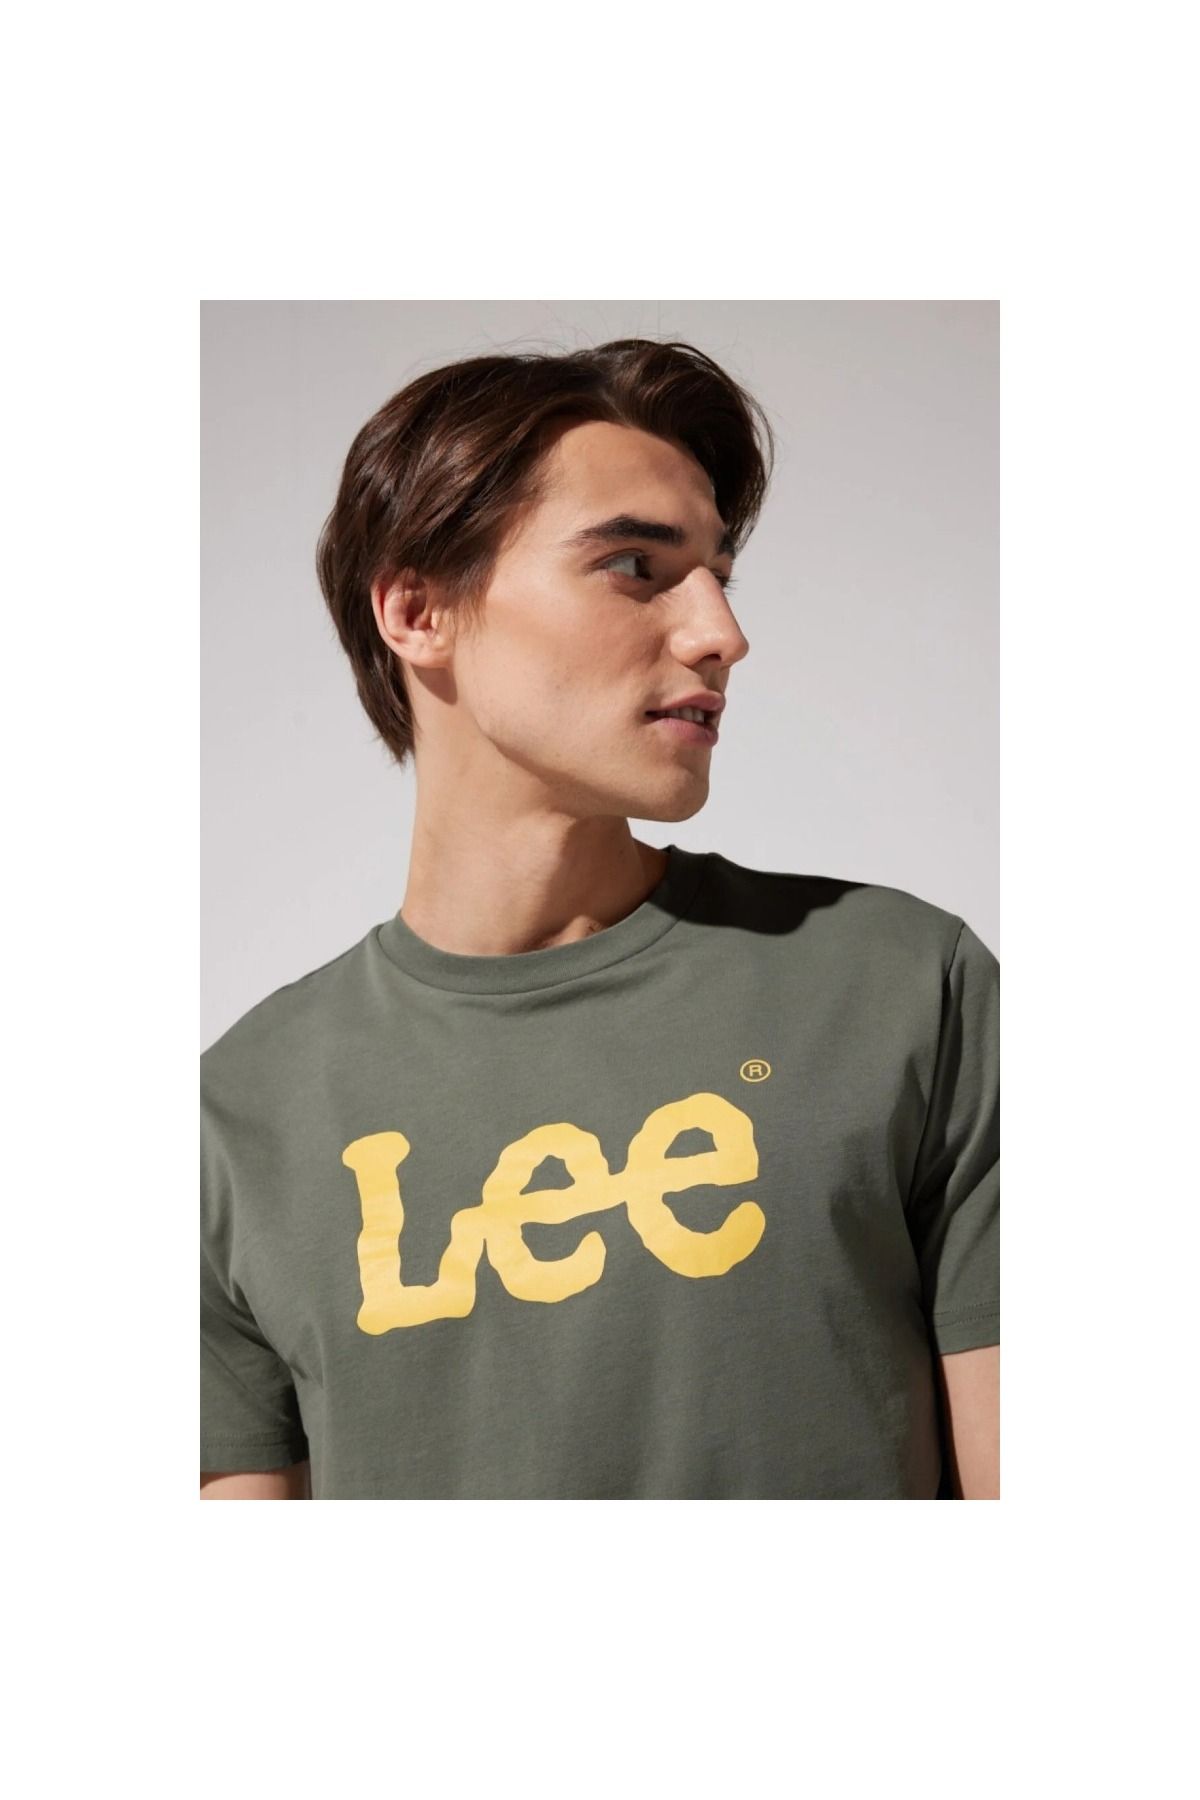 Lee مجموعه اتحادیه اروپا Big Logo Men's Khaki Bike T shirt